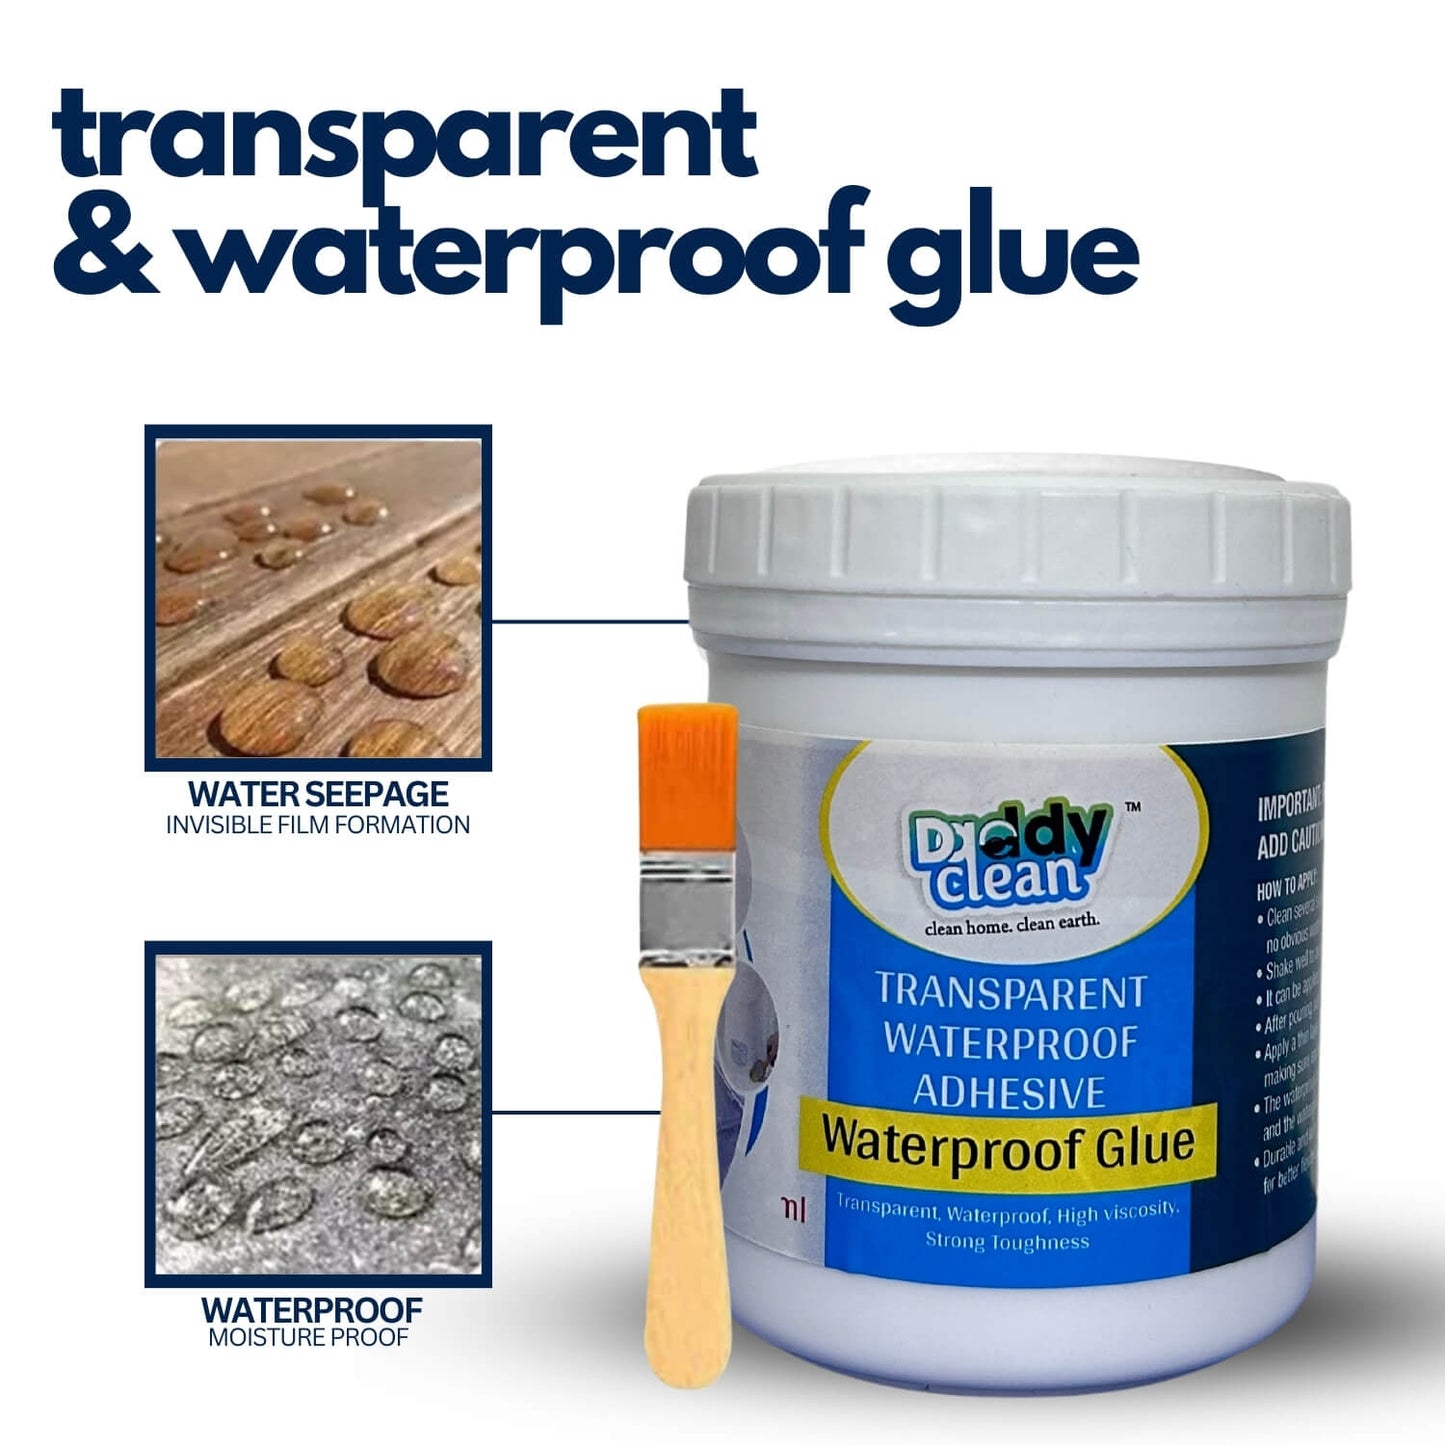 Daddyclean Transparent Waterproof Glue 300g with Free Brush